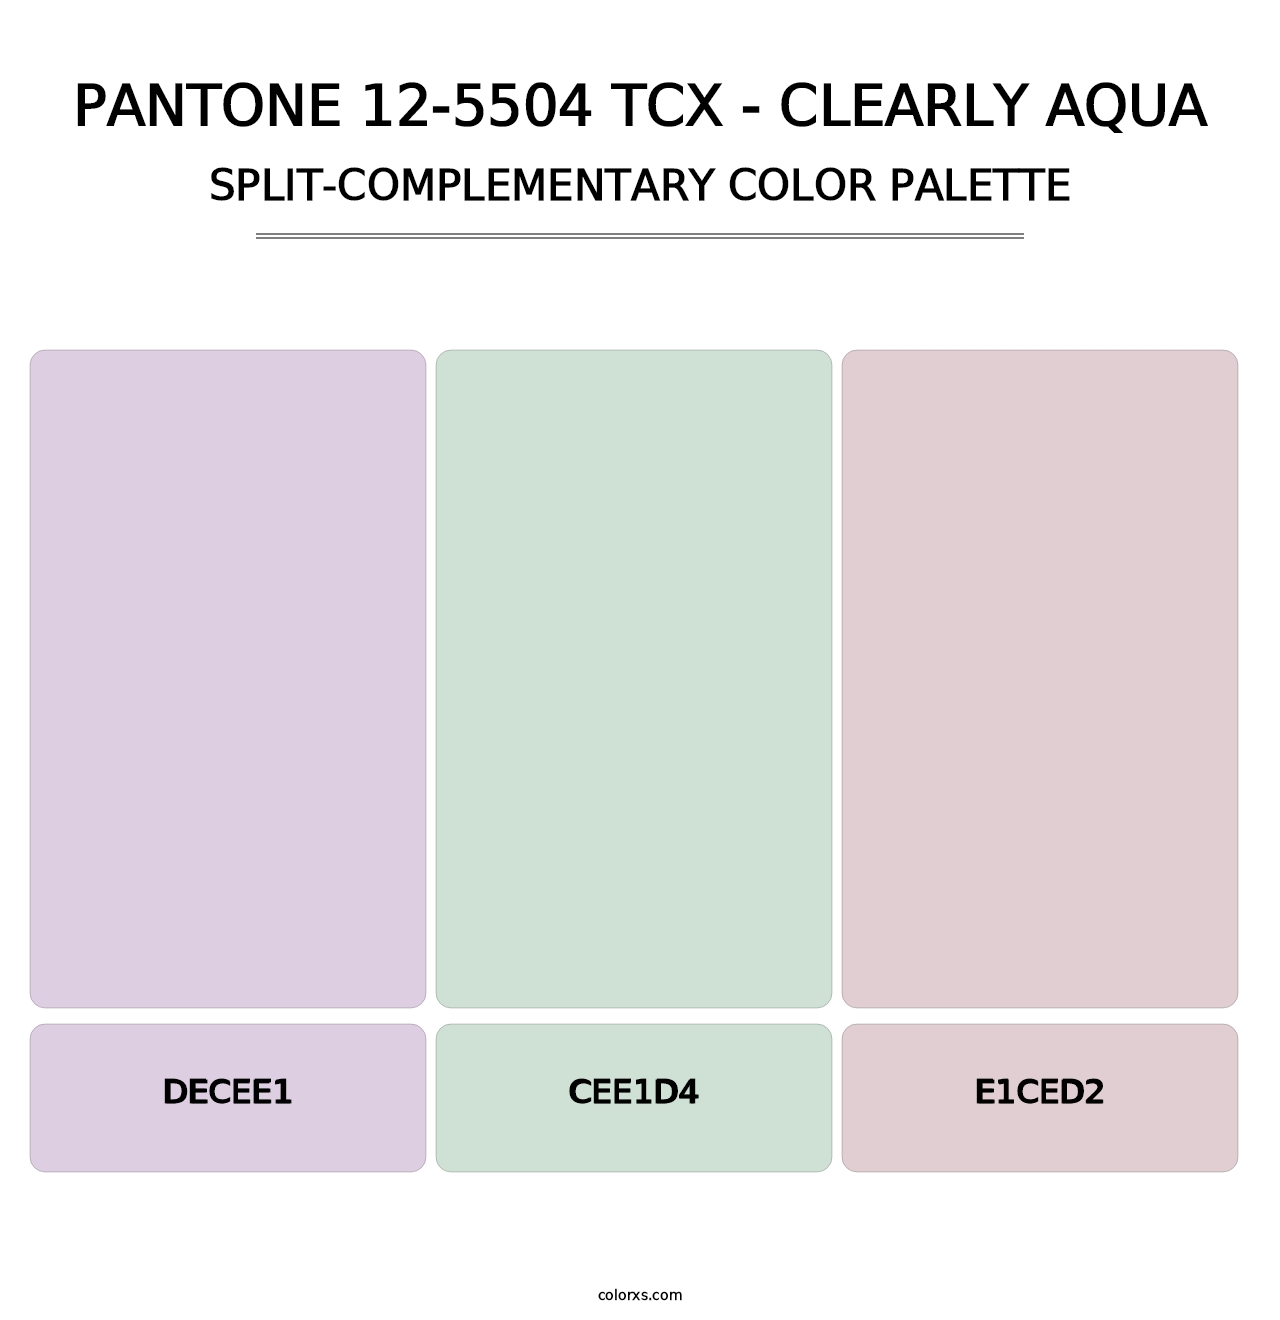 PANTONE 12-5504 TCX - Clearly Aqua - Split-Complementary Color Palette